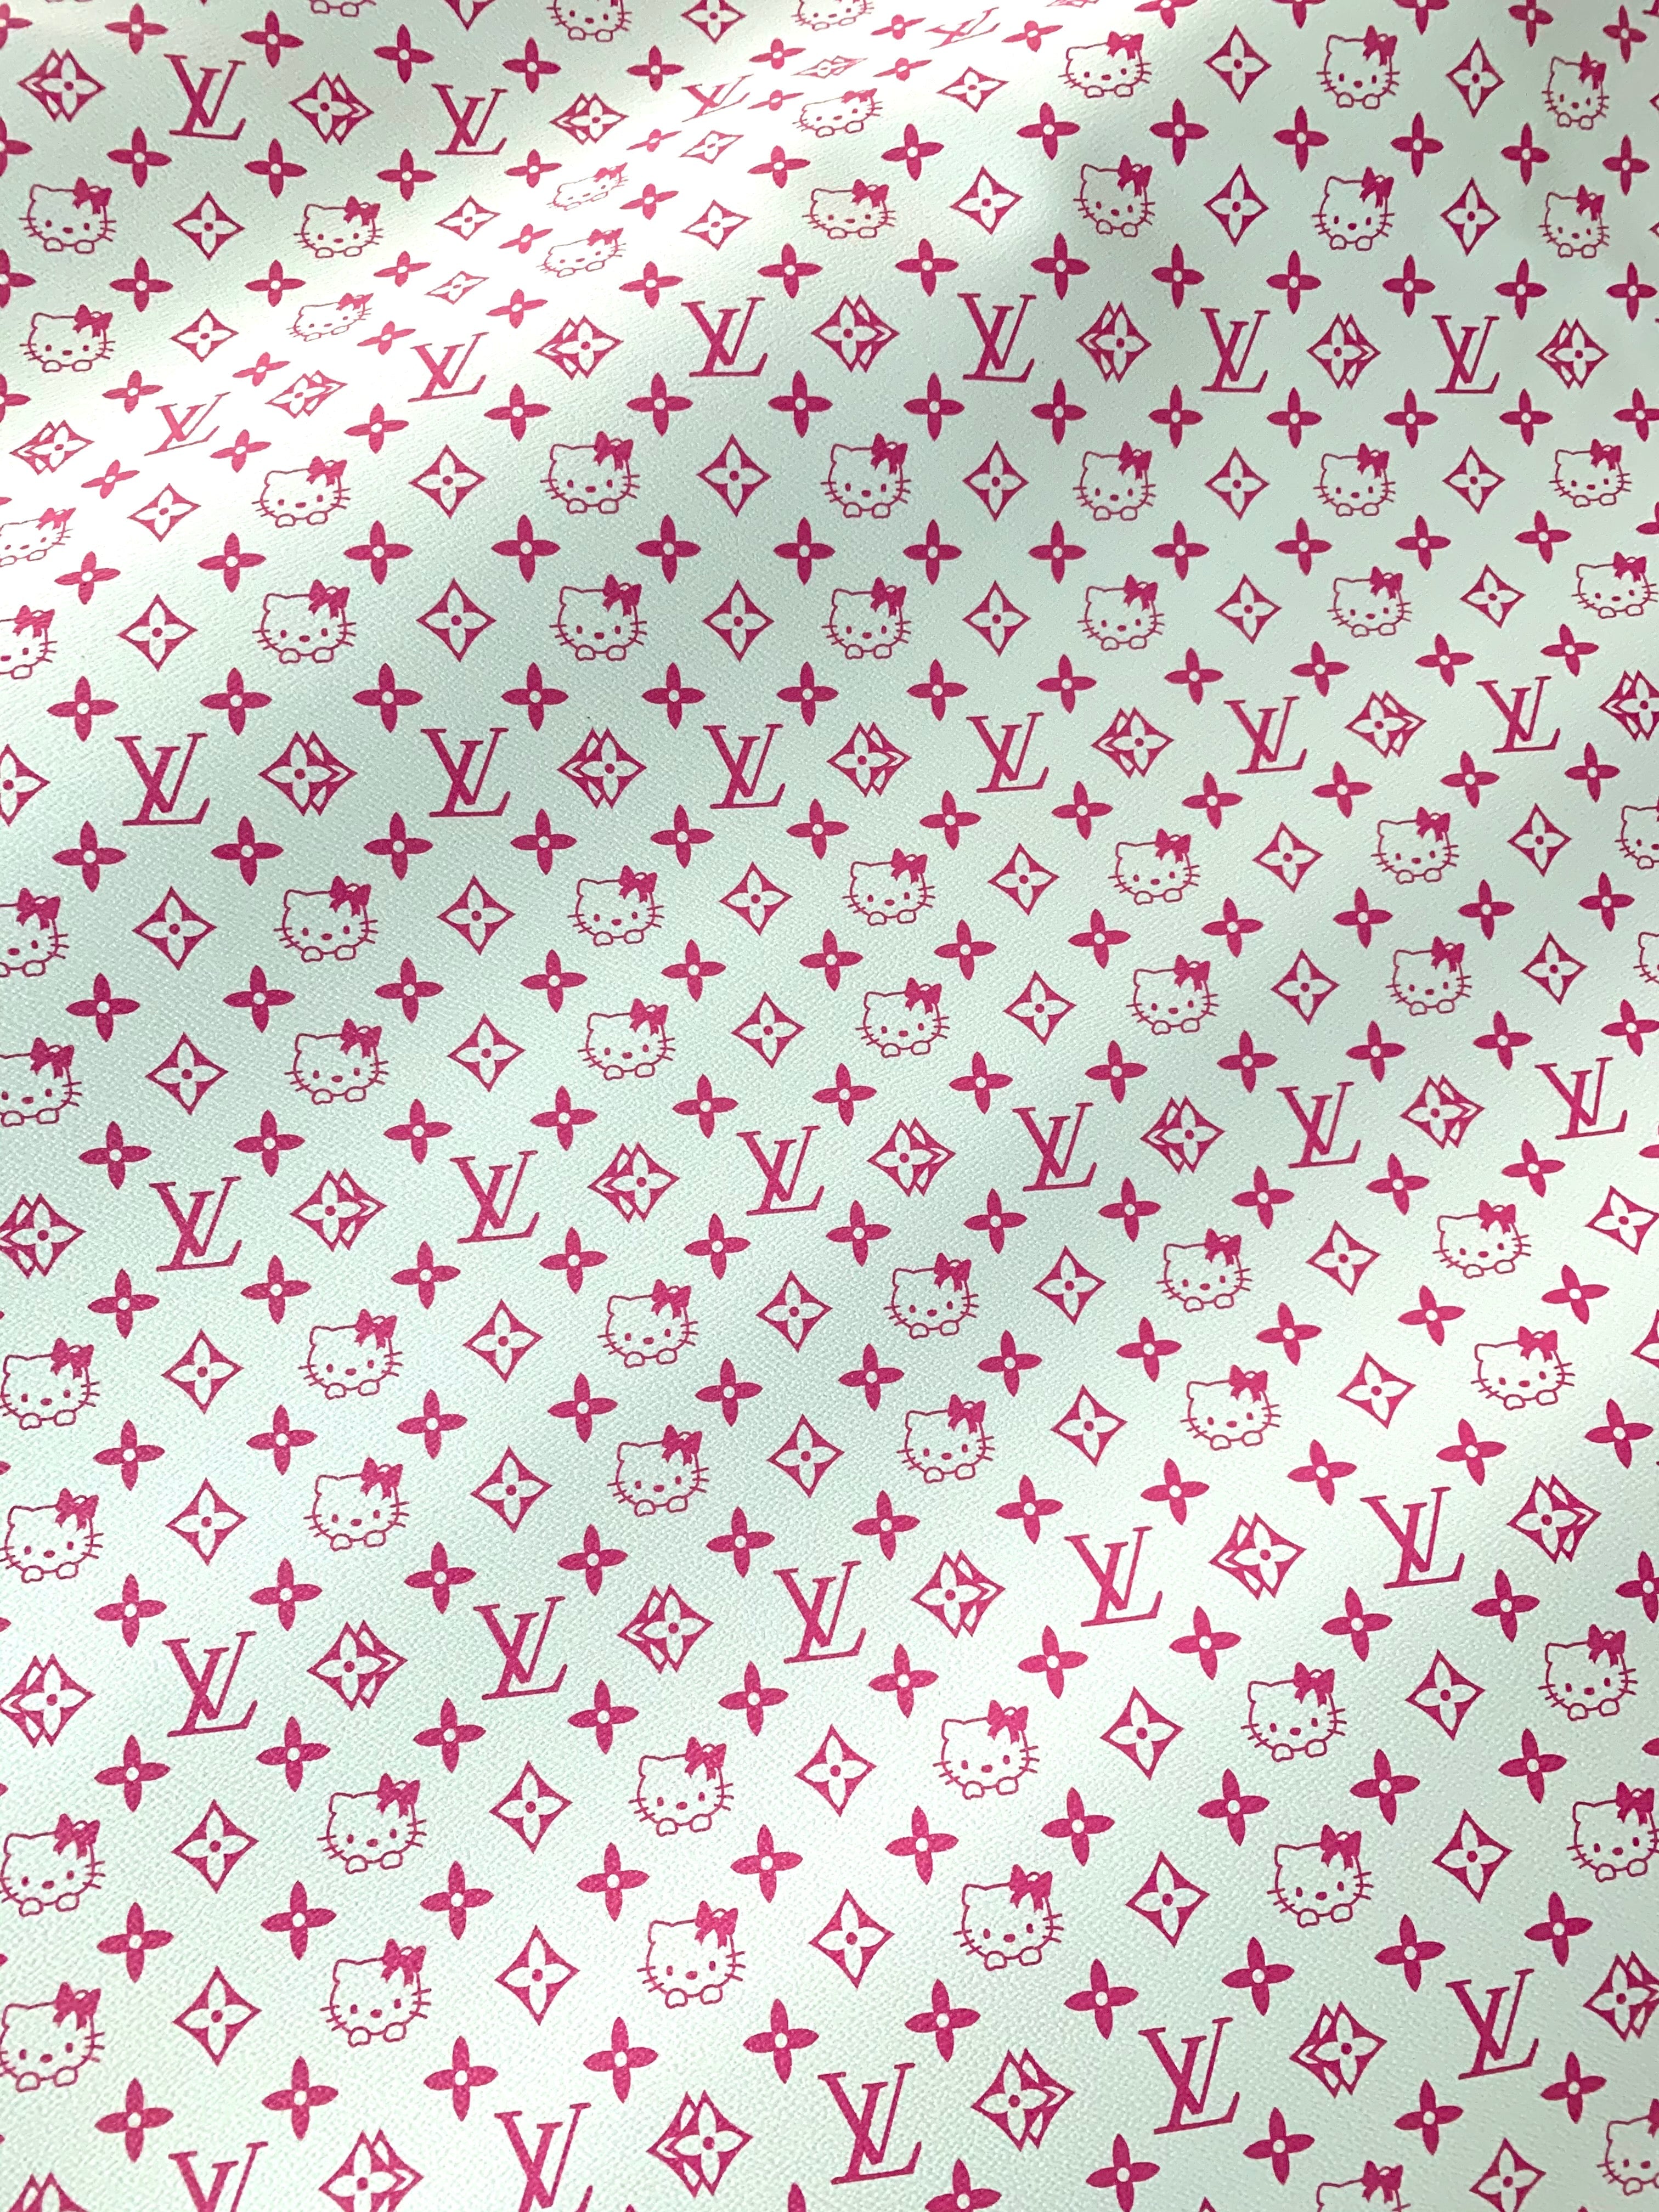 Neoprene fabric hello kitty lv design pink black